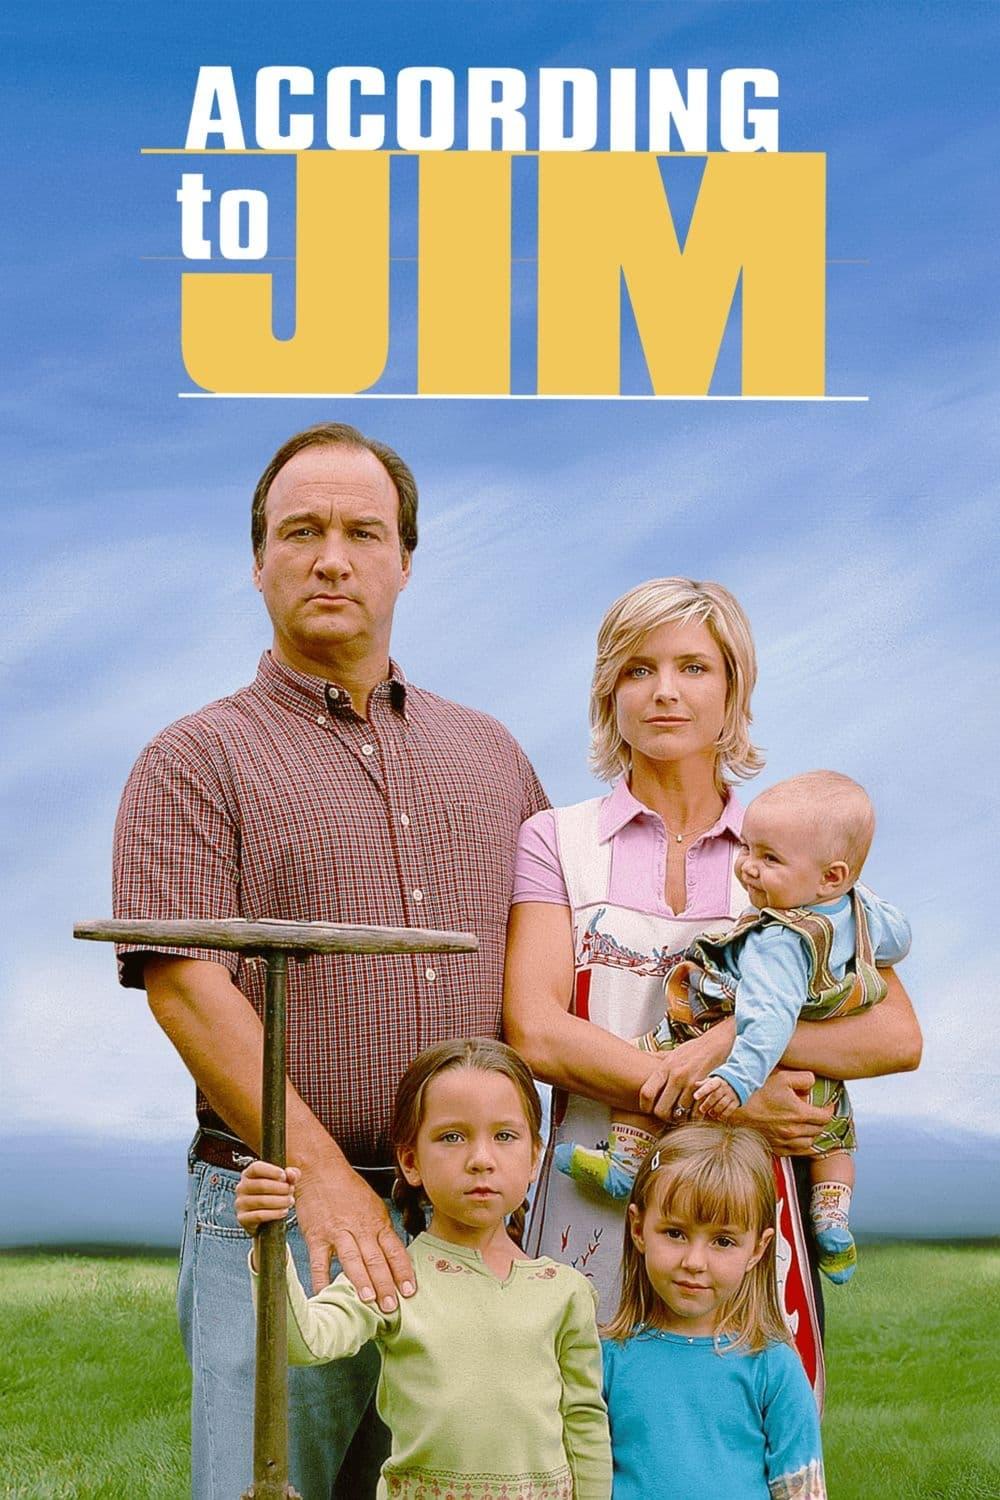 According to Jim poster